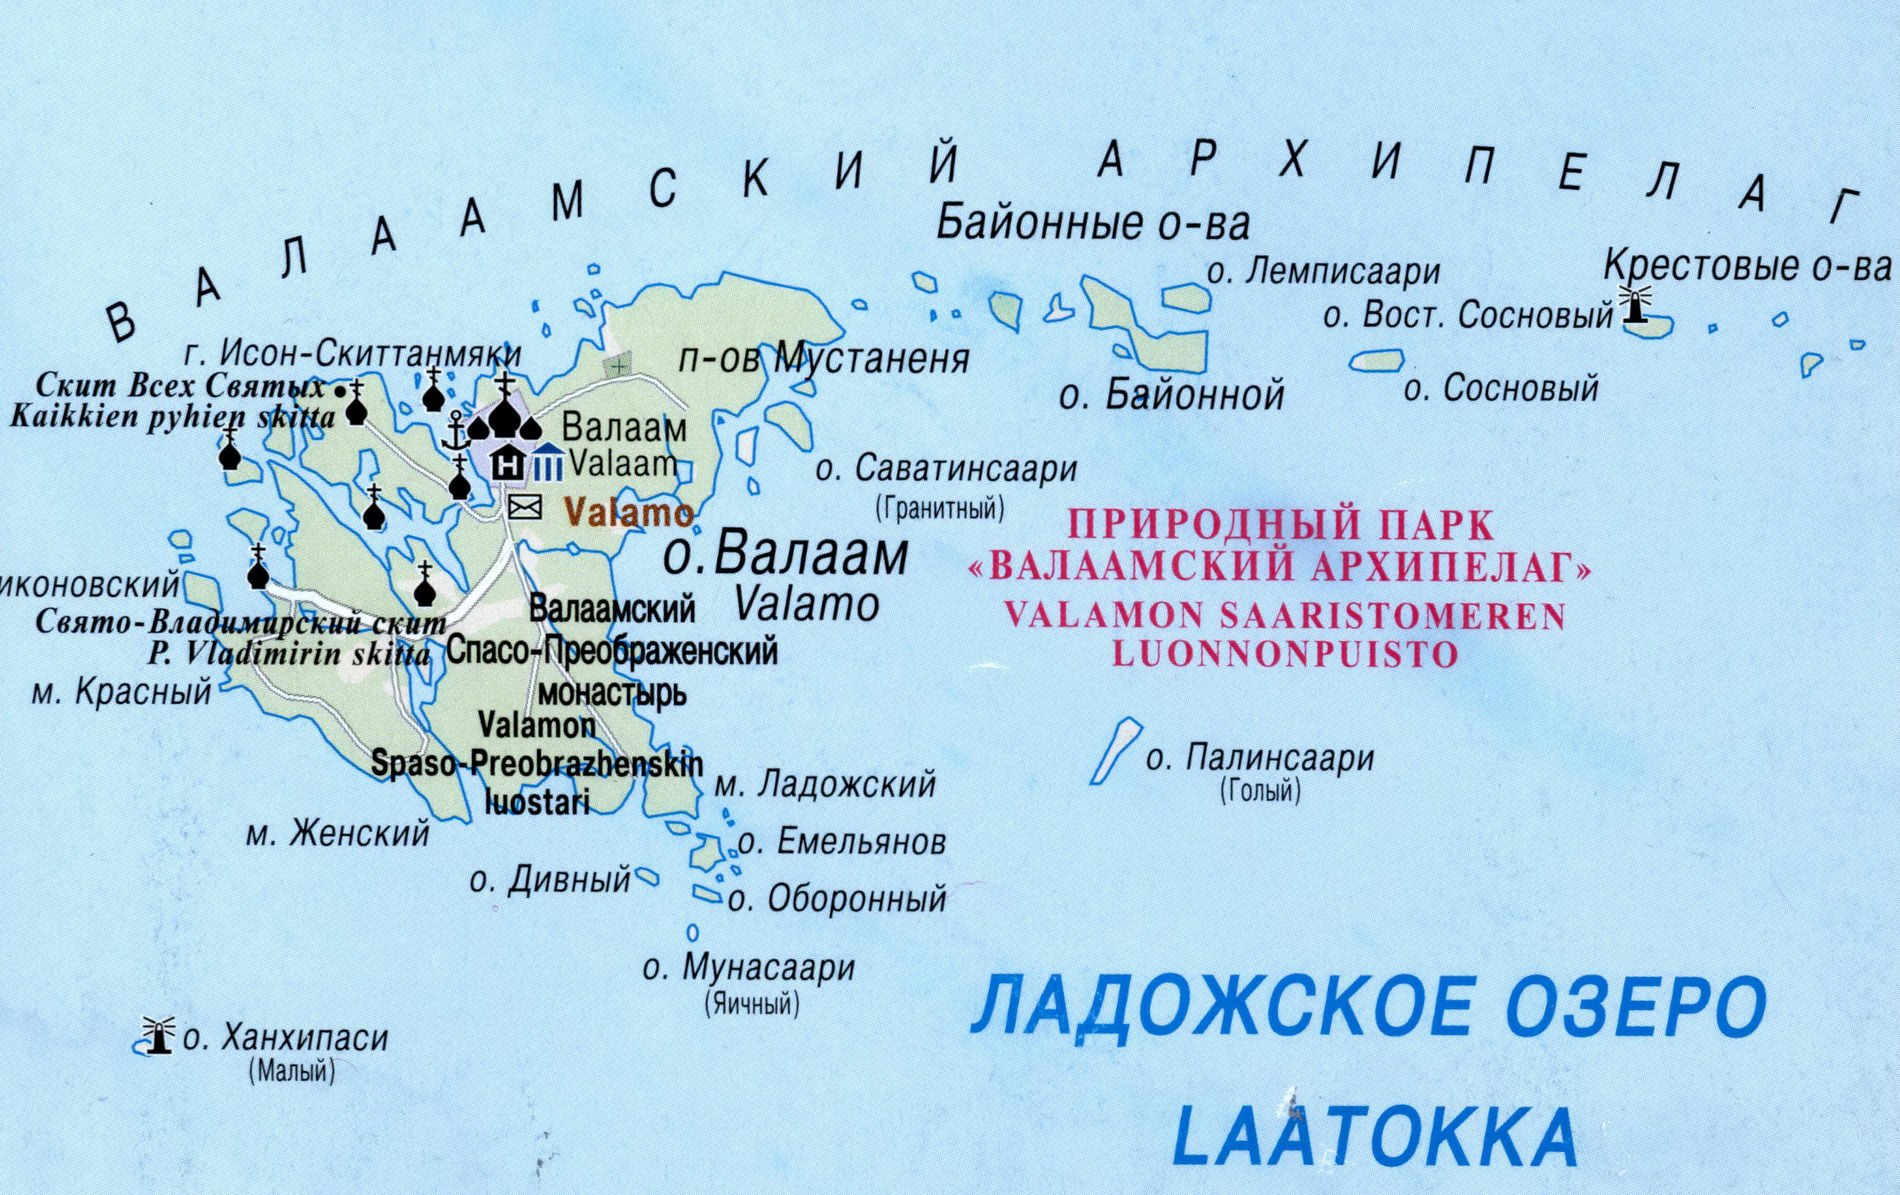 Архипелаг название на карте. Валаамский архипелаг на карте. Архипелаг Валаам на карте. Остров Валаам на карте. Карта островов Валаамского архипелага.